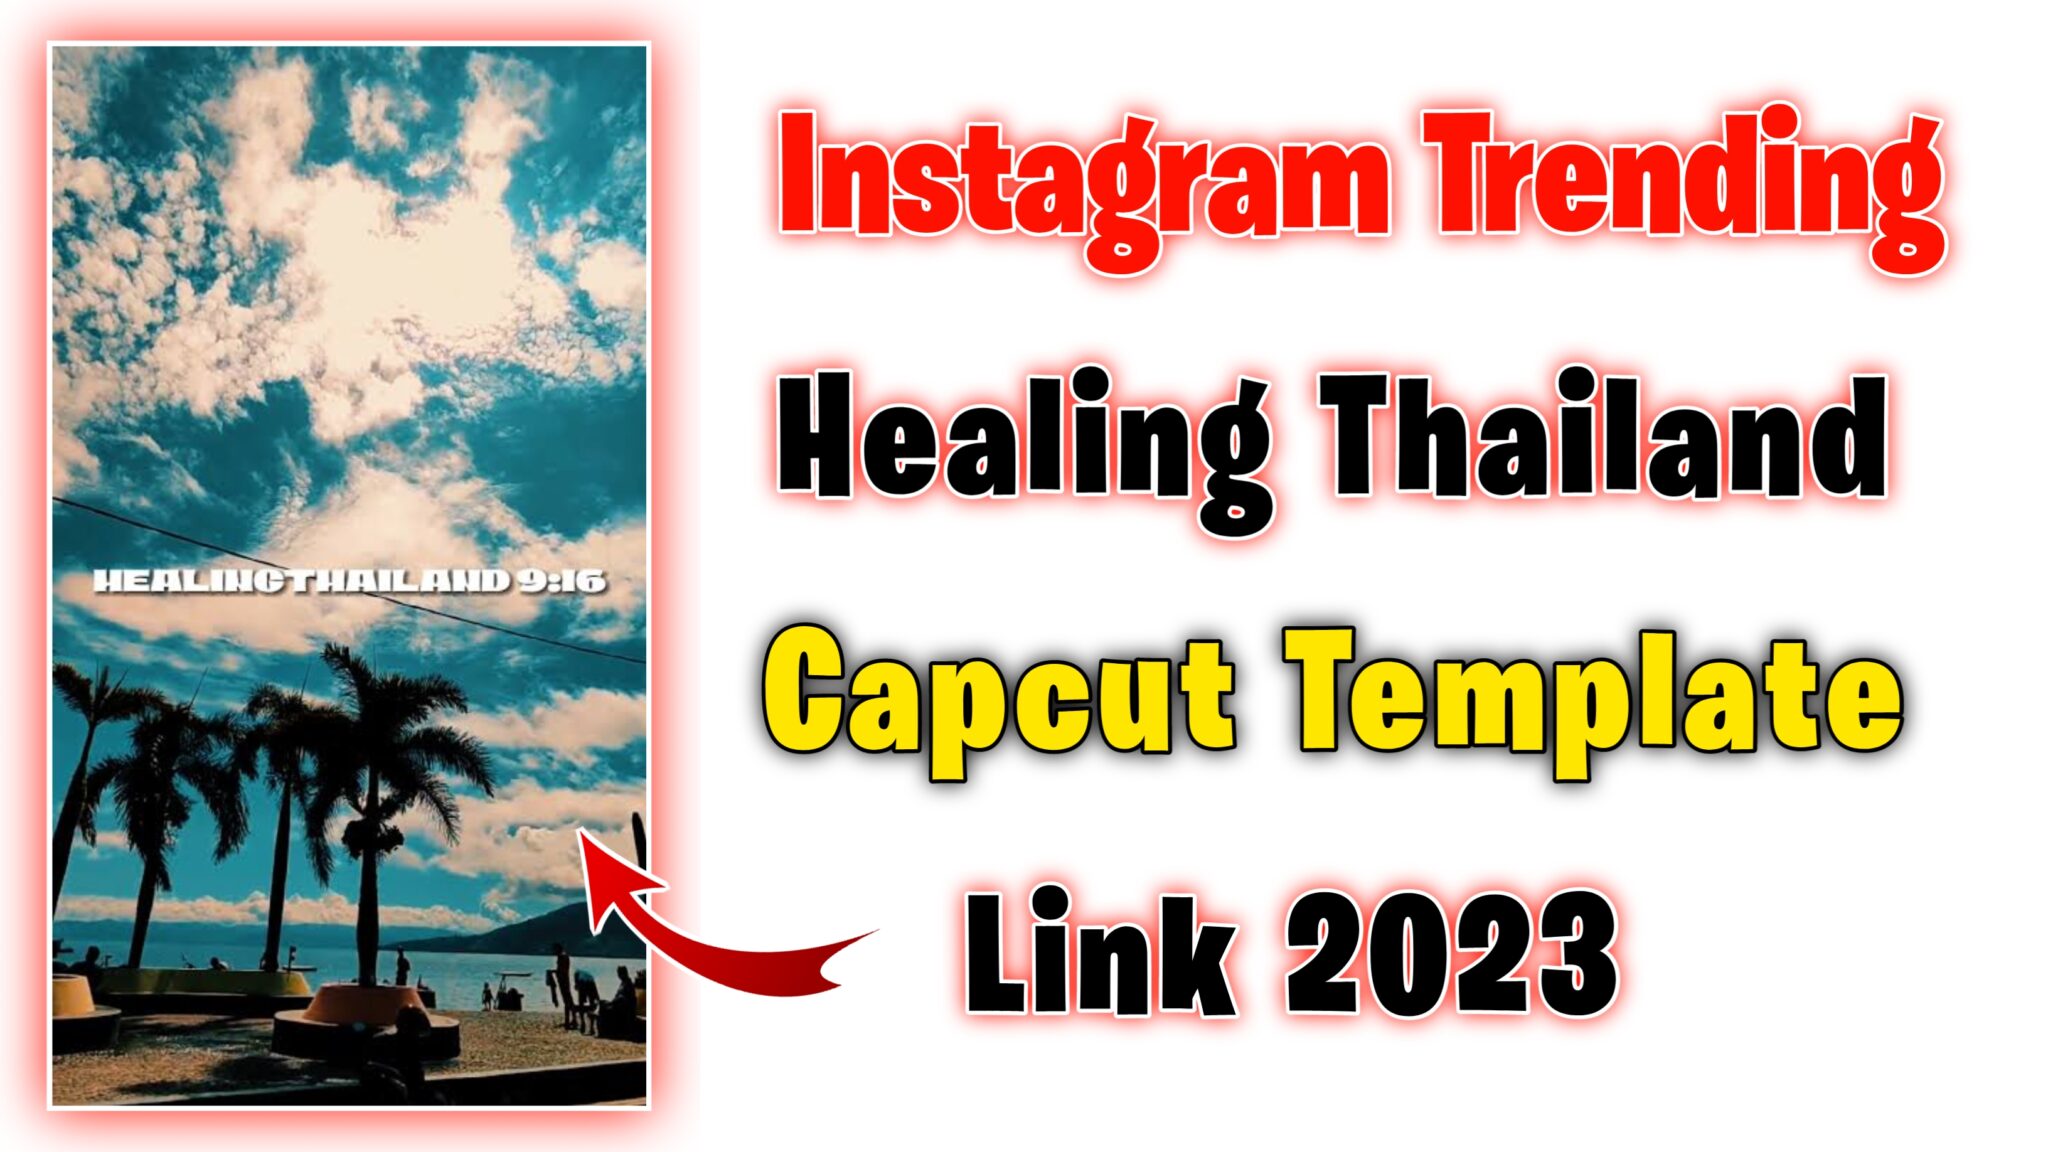 instagram-trending-healing-thailand-capcut-template-link-2023-tahir-editz